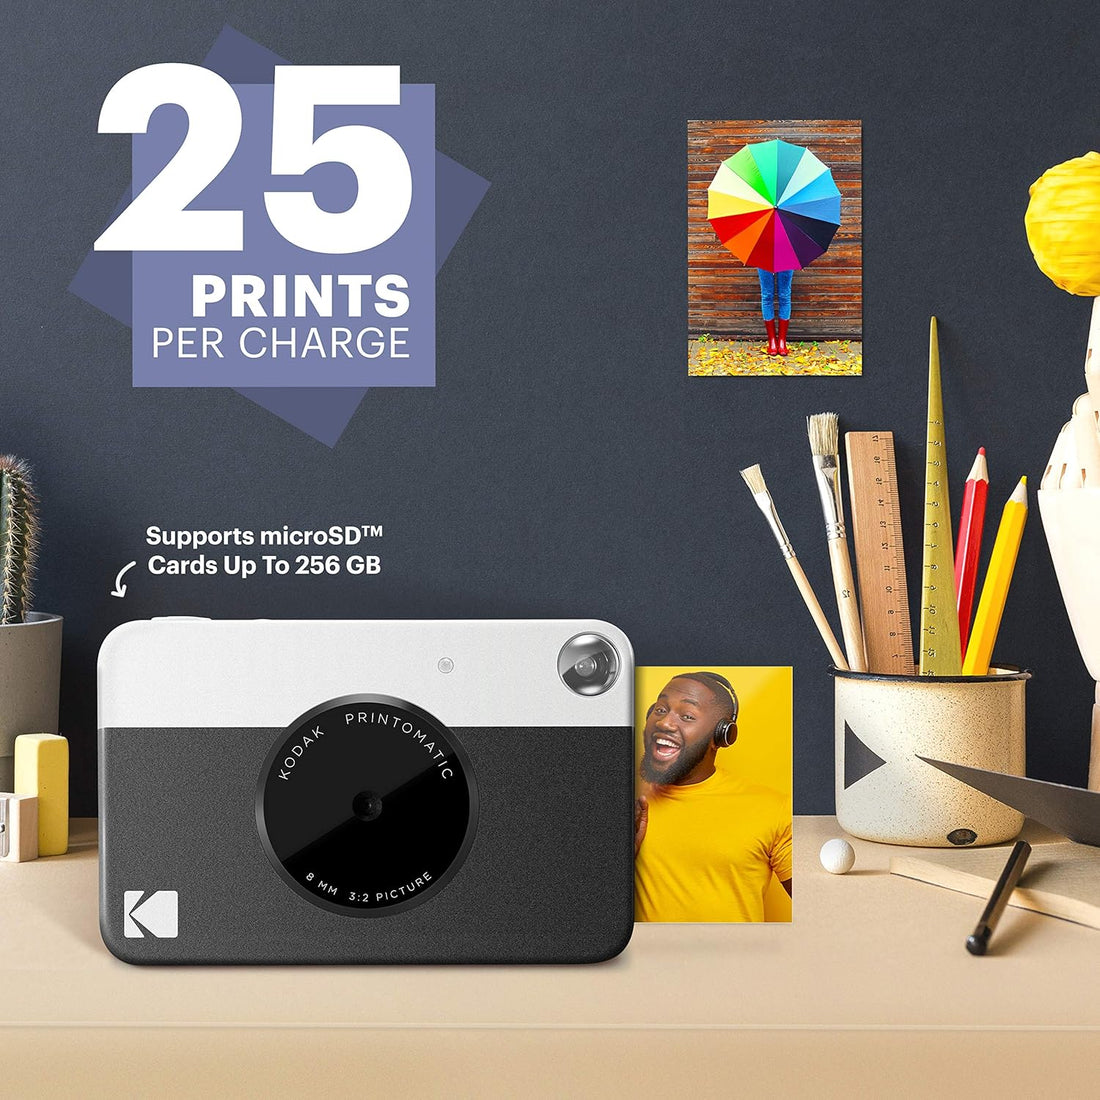 Kodak PRINTOMATIC Digital Instant Print Camera (Black), Full Color Prints On Zink 2x3 Sticky-Backed Photo Paper - Print Memories Instantly